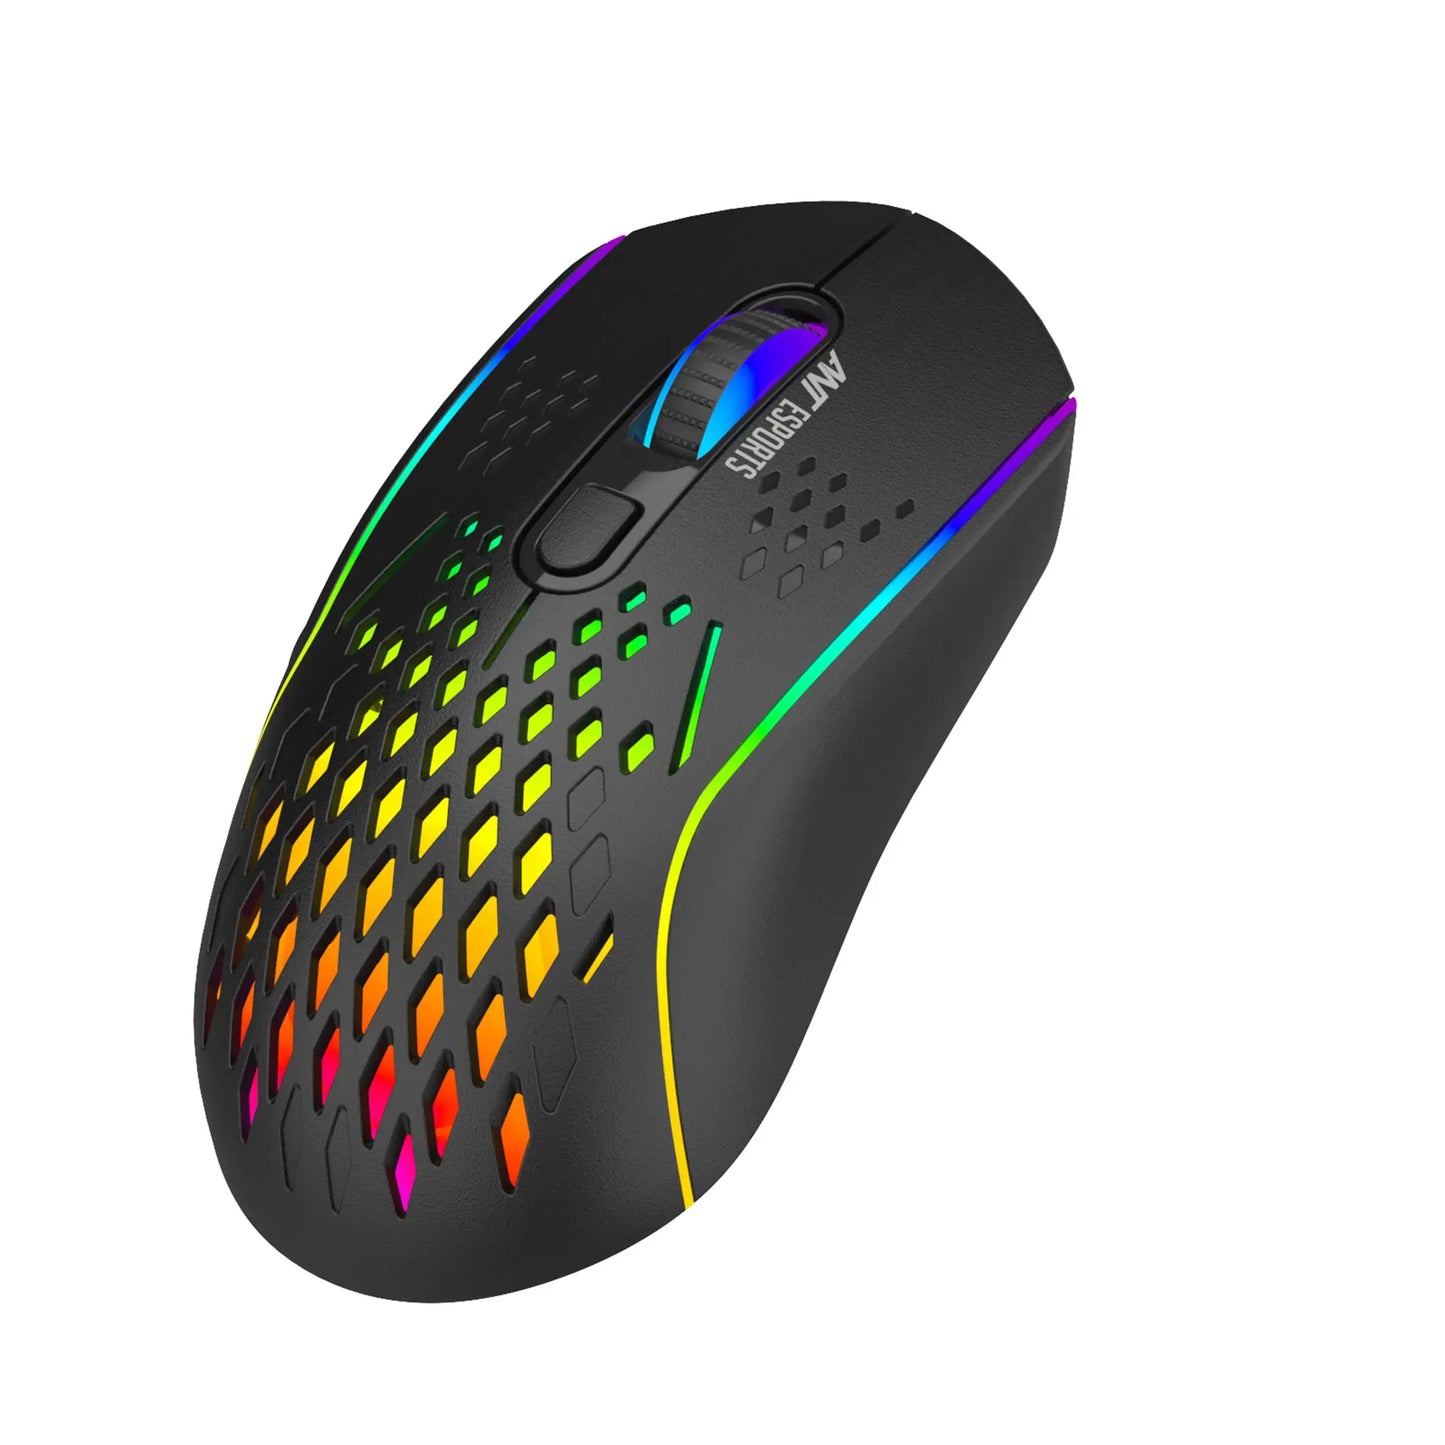 Ant Esports GM700 RGB Wireless Gaming Mouse - Black 4800 DPI